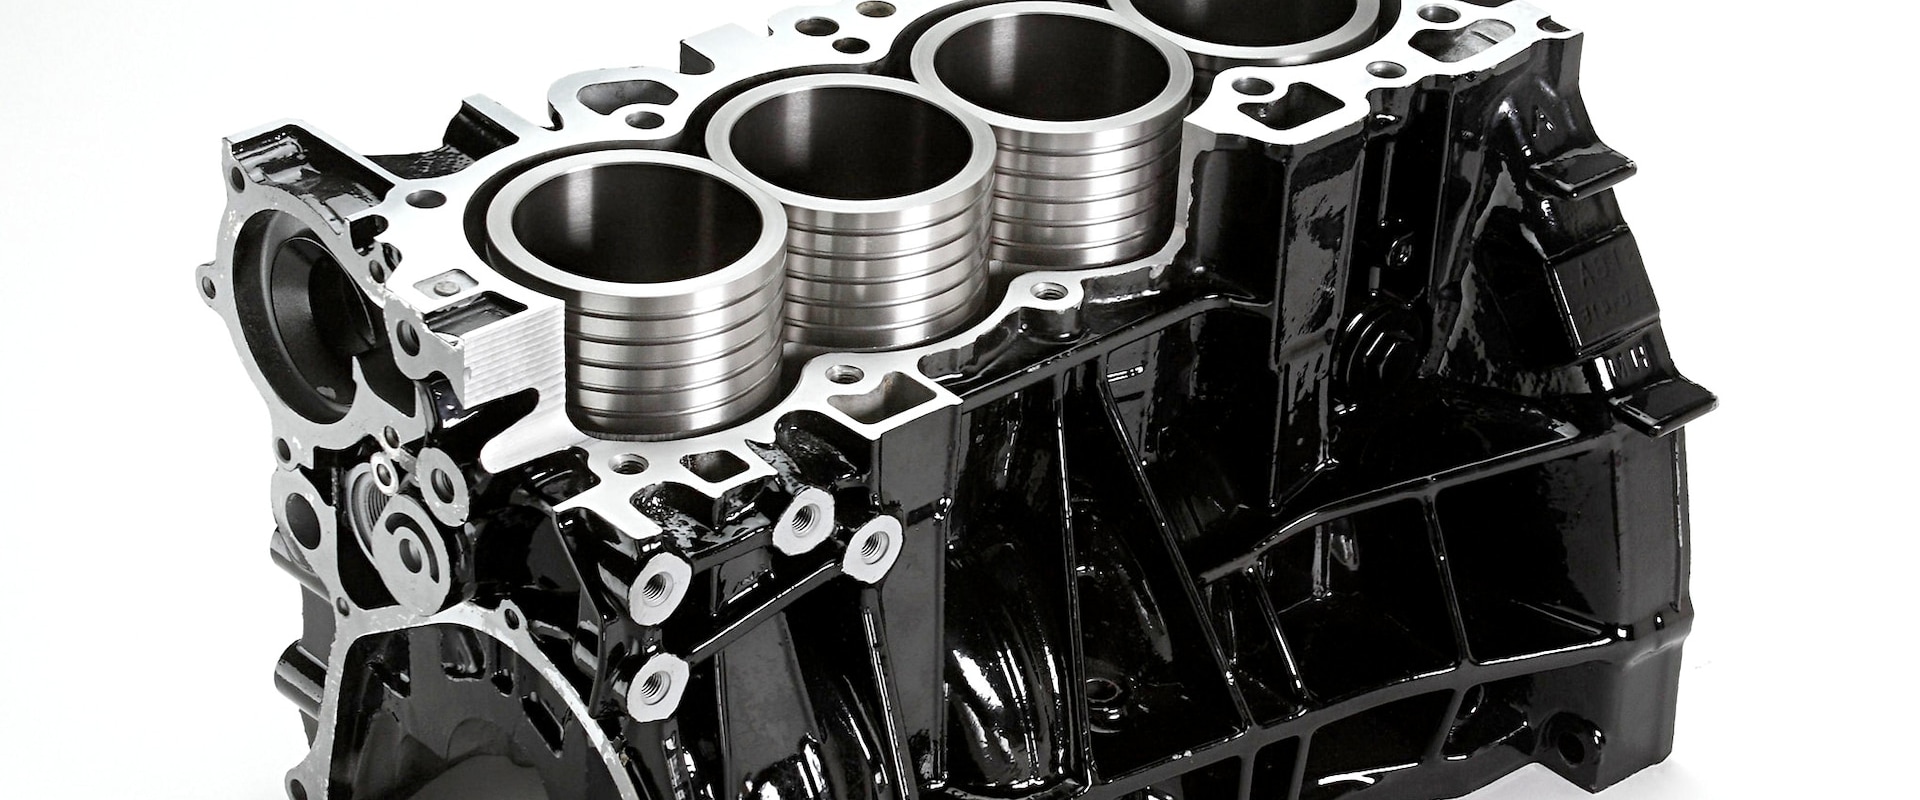 Understanding Engine Parts and Accessories